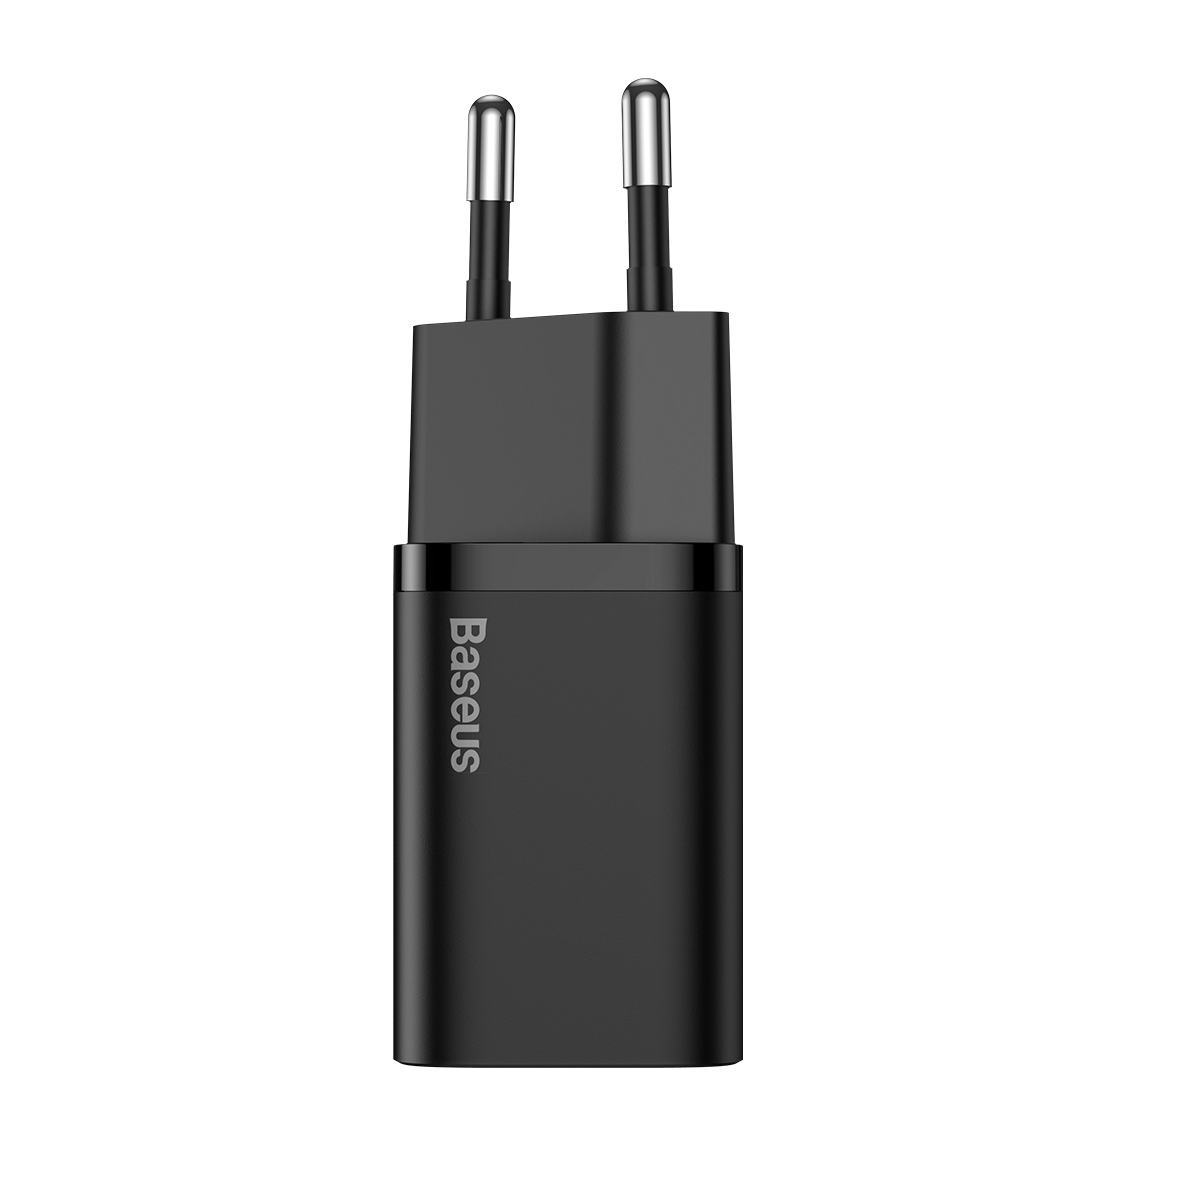 Сетевое зарядное устройство Baseus Super Si 1C USB Type C 30 W Power Delivery Quick Charge (CCSUP-J01) Black